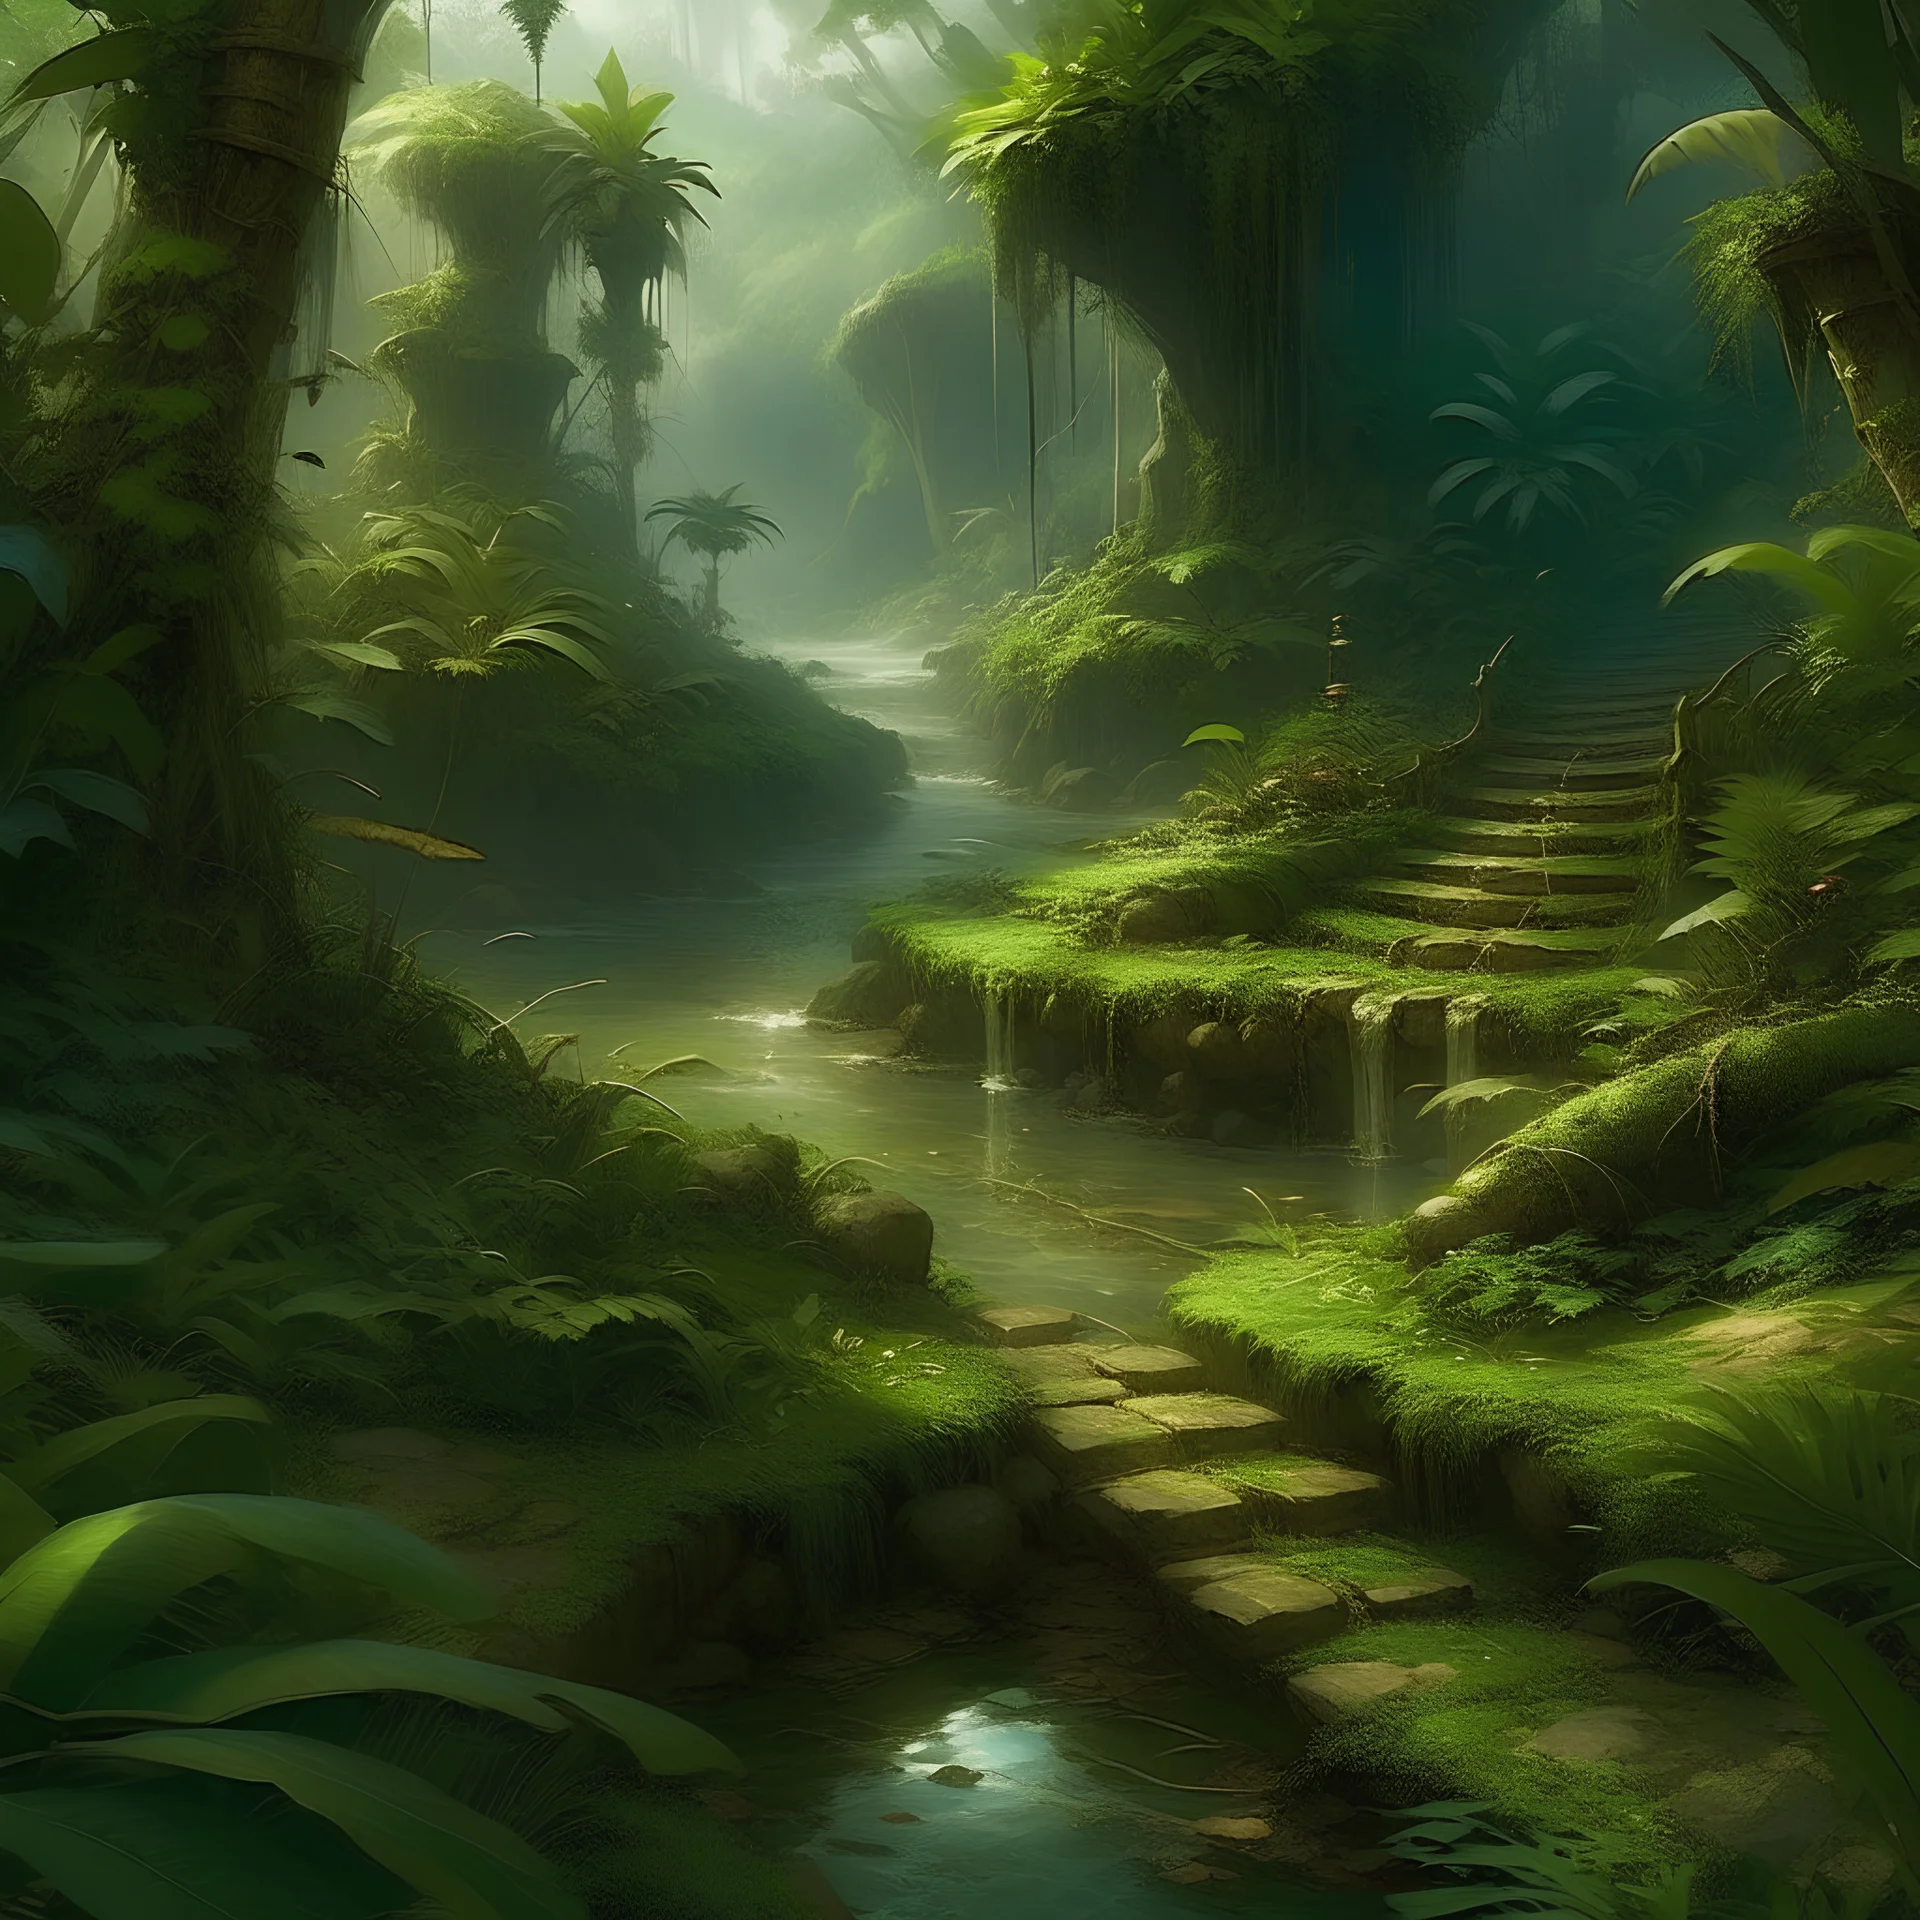 jungle path next to a river on the rightfantasy art